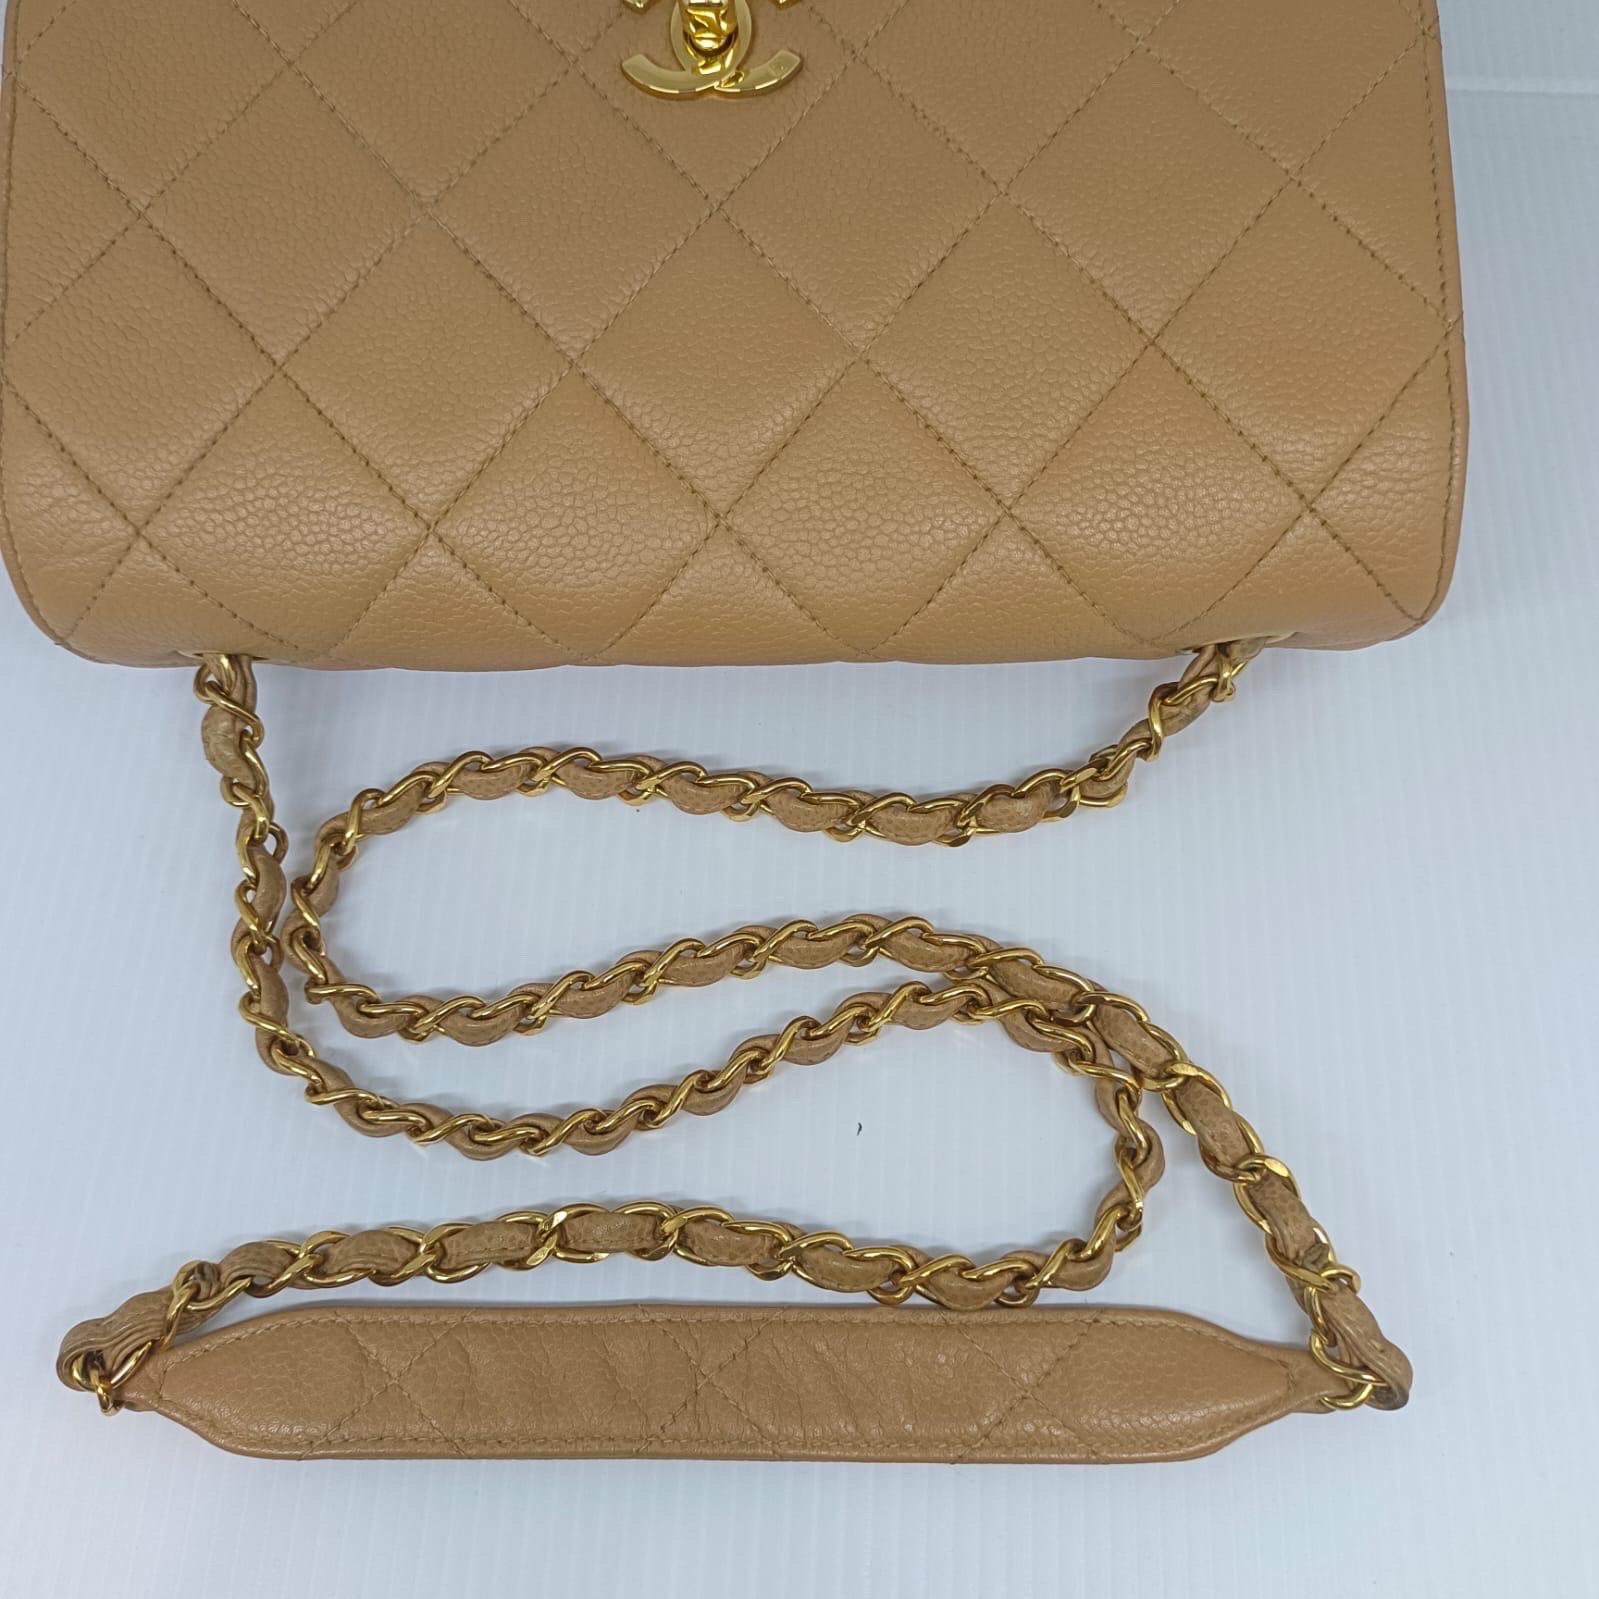 1990s Vintage Chanel Beige Caviar Leather Flap Bag For Sale 3